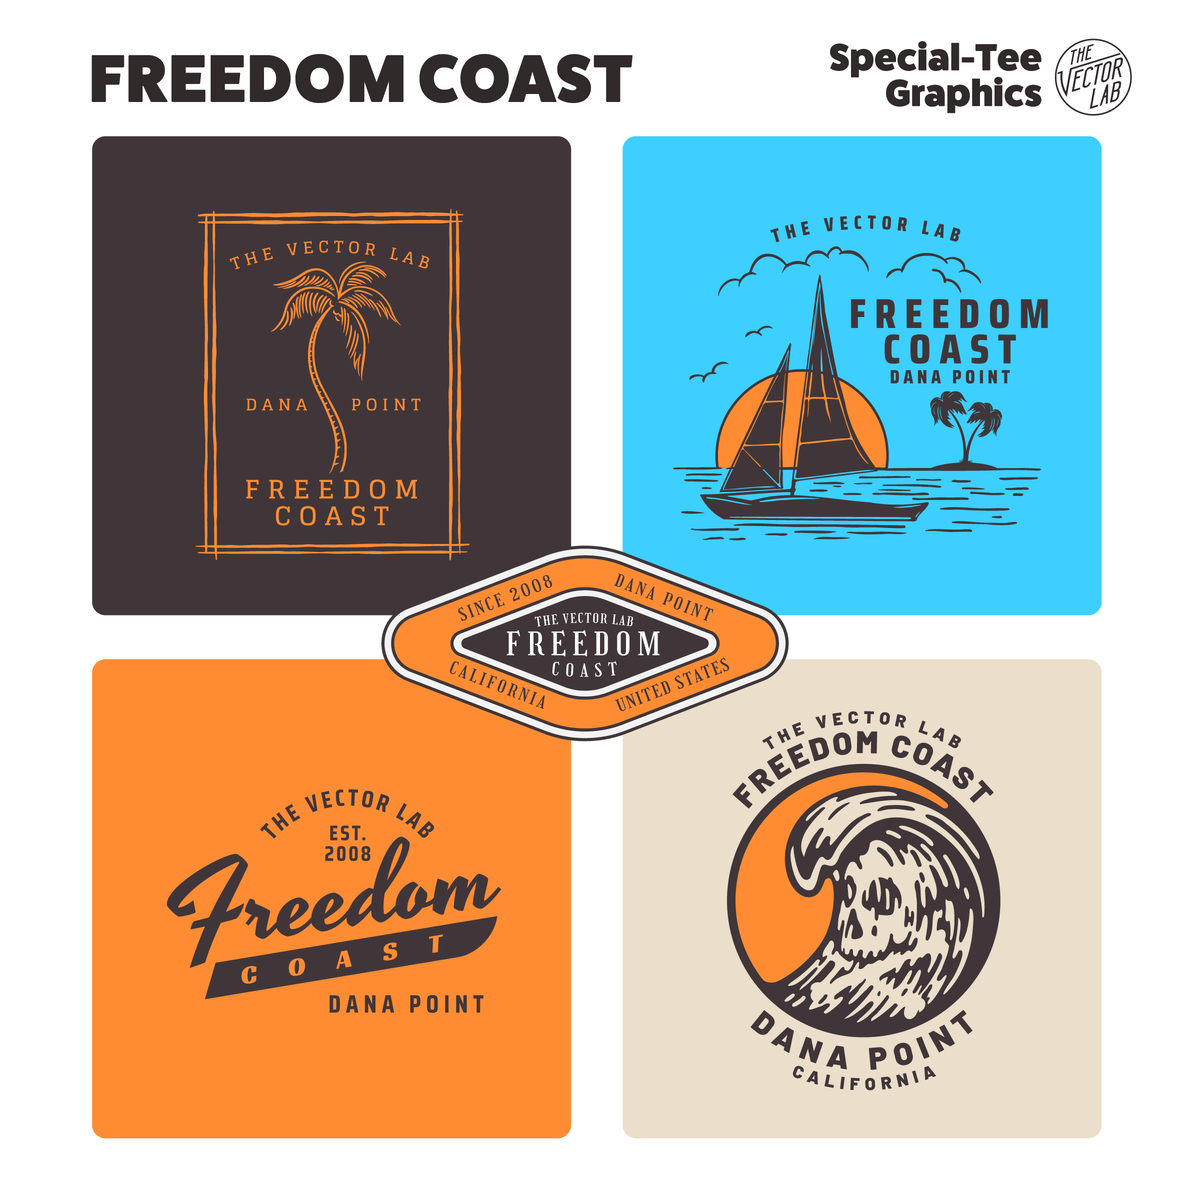 Freedom Coast - TheVectorLab